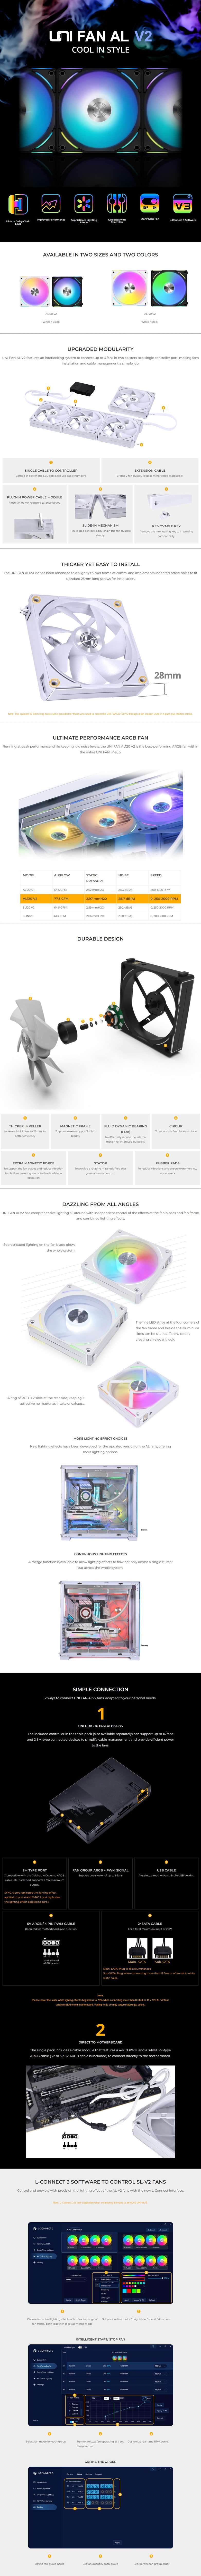 A large marketing image providing additional information about the product Lian Li UNI Fan AL120 V2 Fan White - Triple Pack - Additional alt info not provided